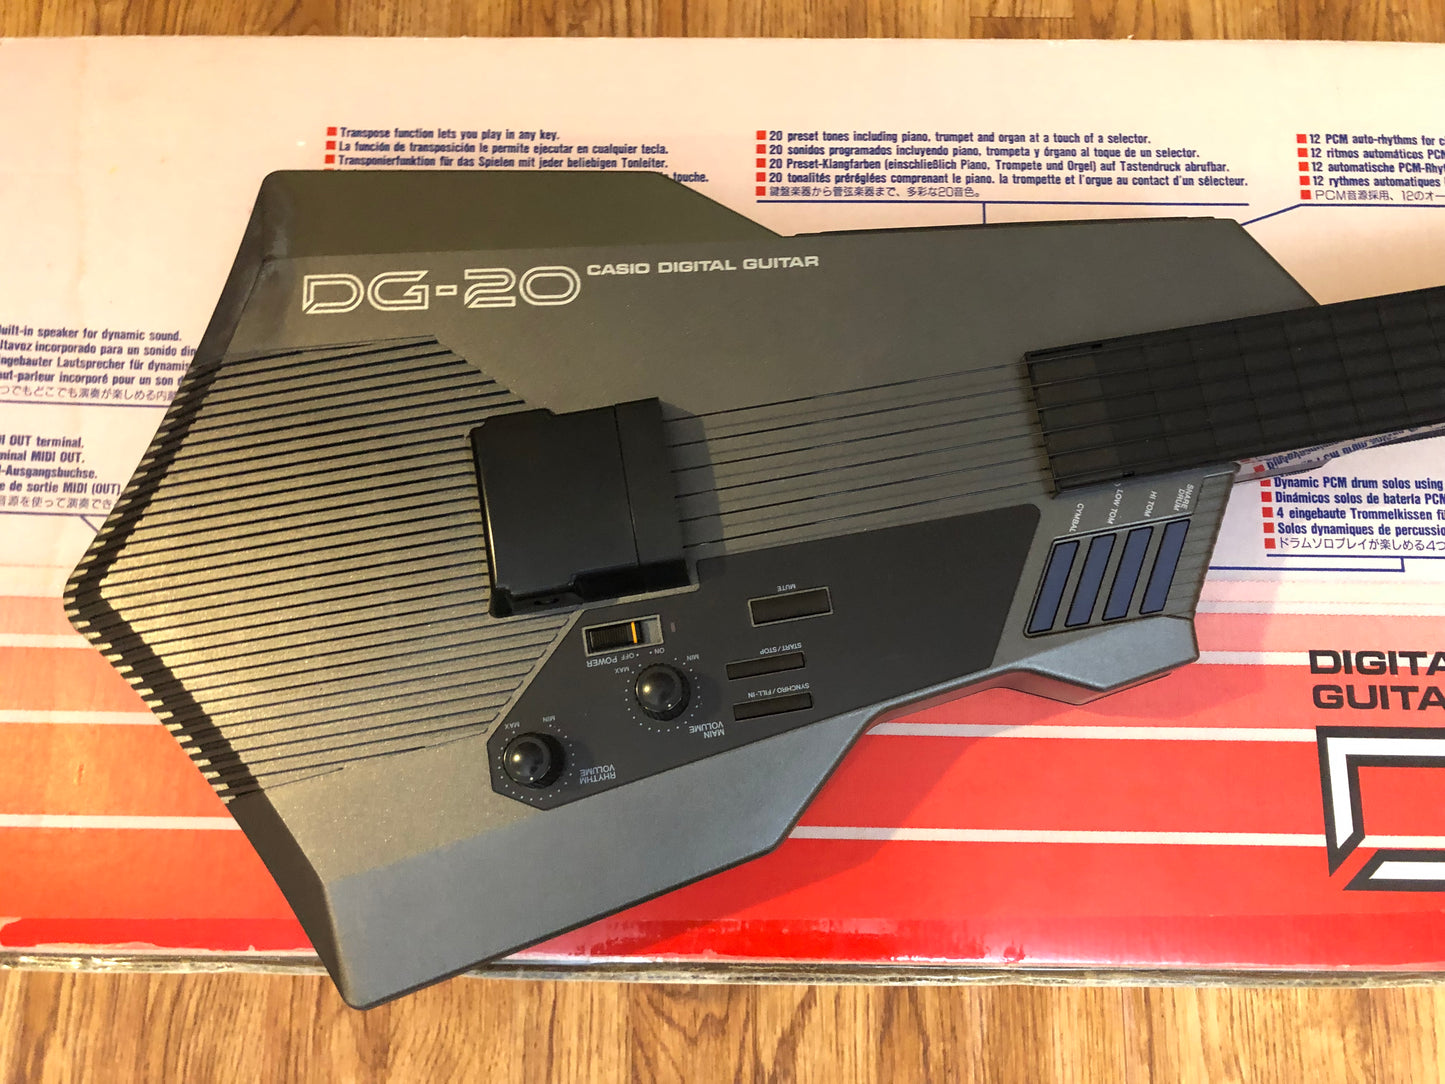 Vintage 1980s Casio DG-20 Digital Guitar Synthesizer